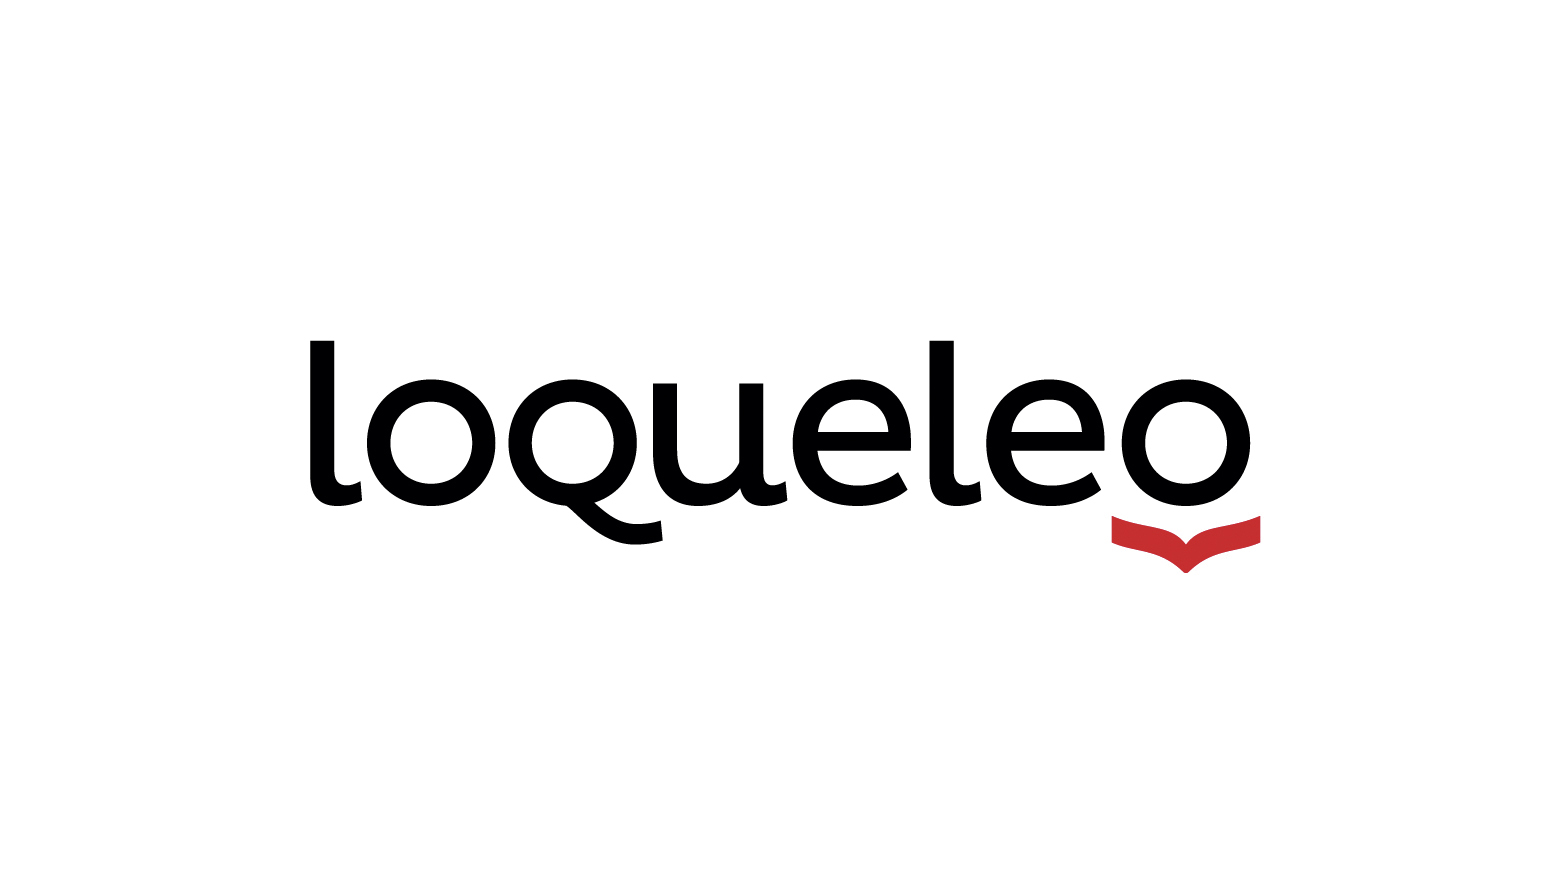 Loqueleo_logo_WEB.JPG